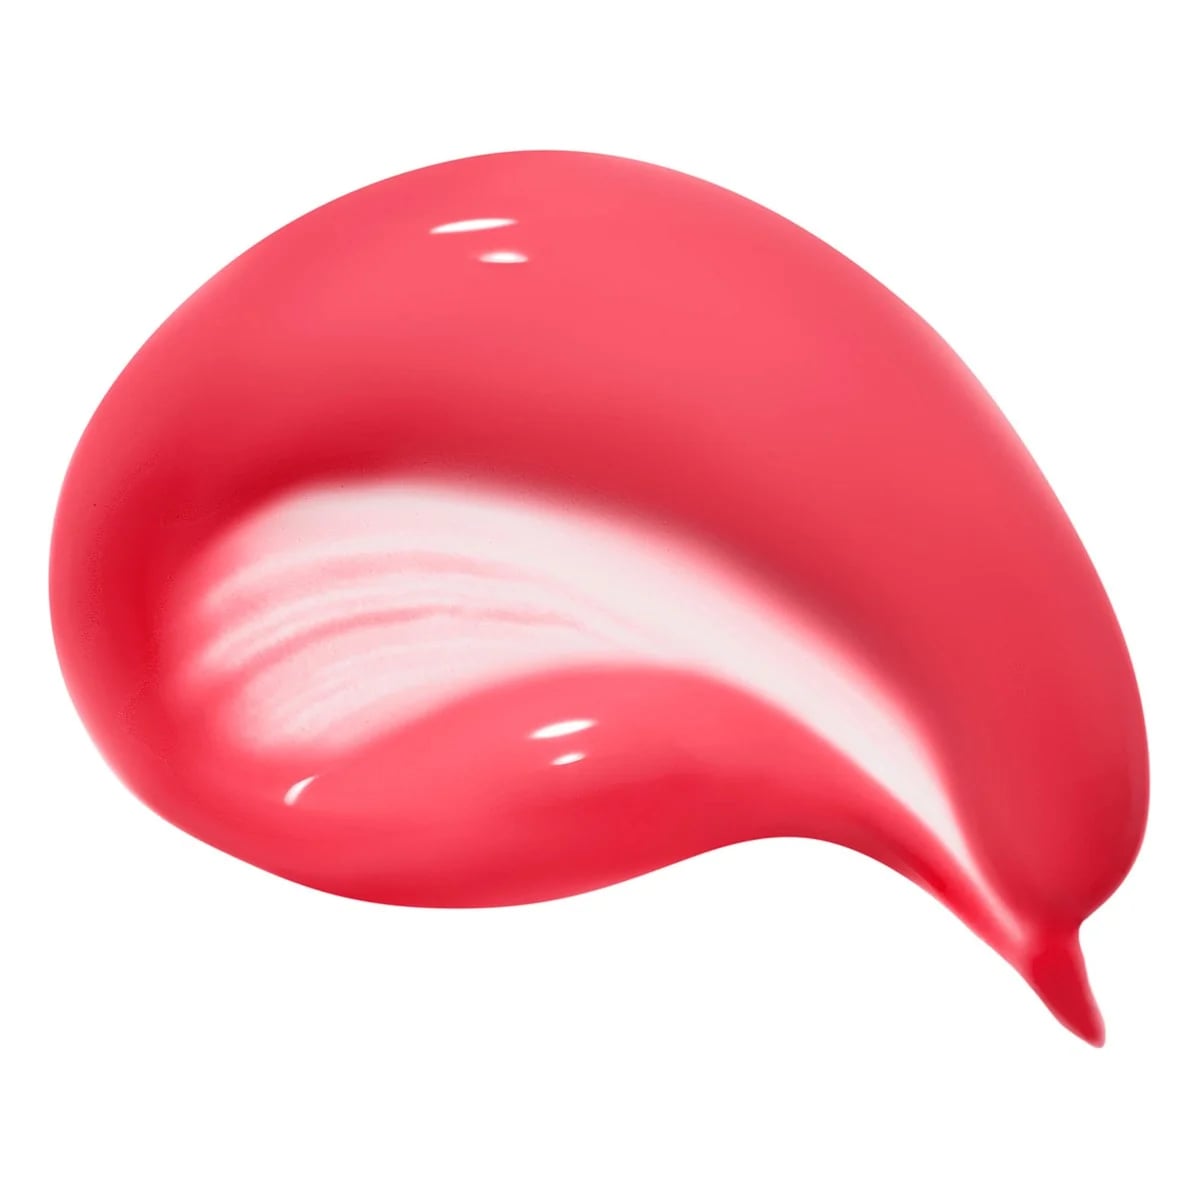 Playtint Cheek & Lip Stain Pink-lemonade tinted lip & cheek stain by Benefit